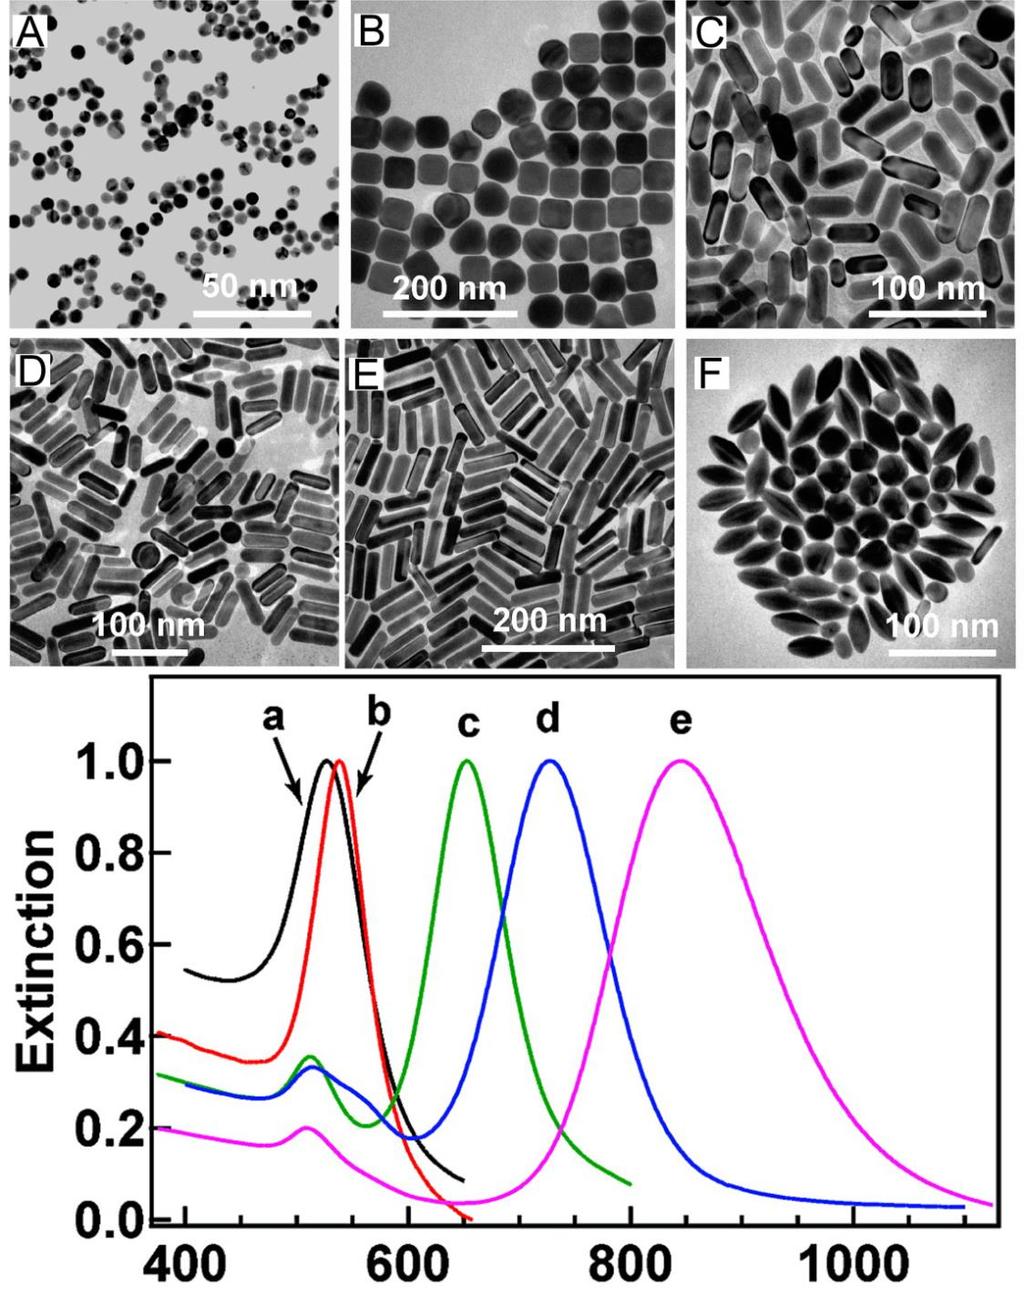 Figure 1.8 (top) TEM images of Au nanostructures of various shapes and sizes. (A) Nanospheres, (B) Nanocubes, (C) Nanorods (AR=2.4), (D) Nanorods (AR=3.